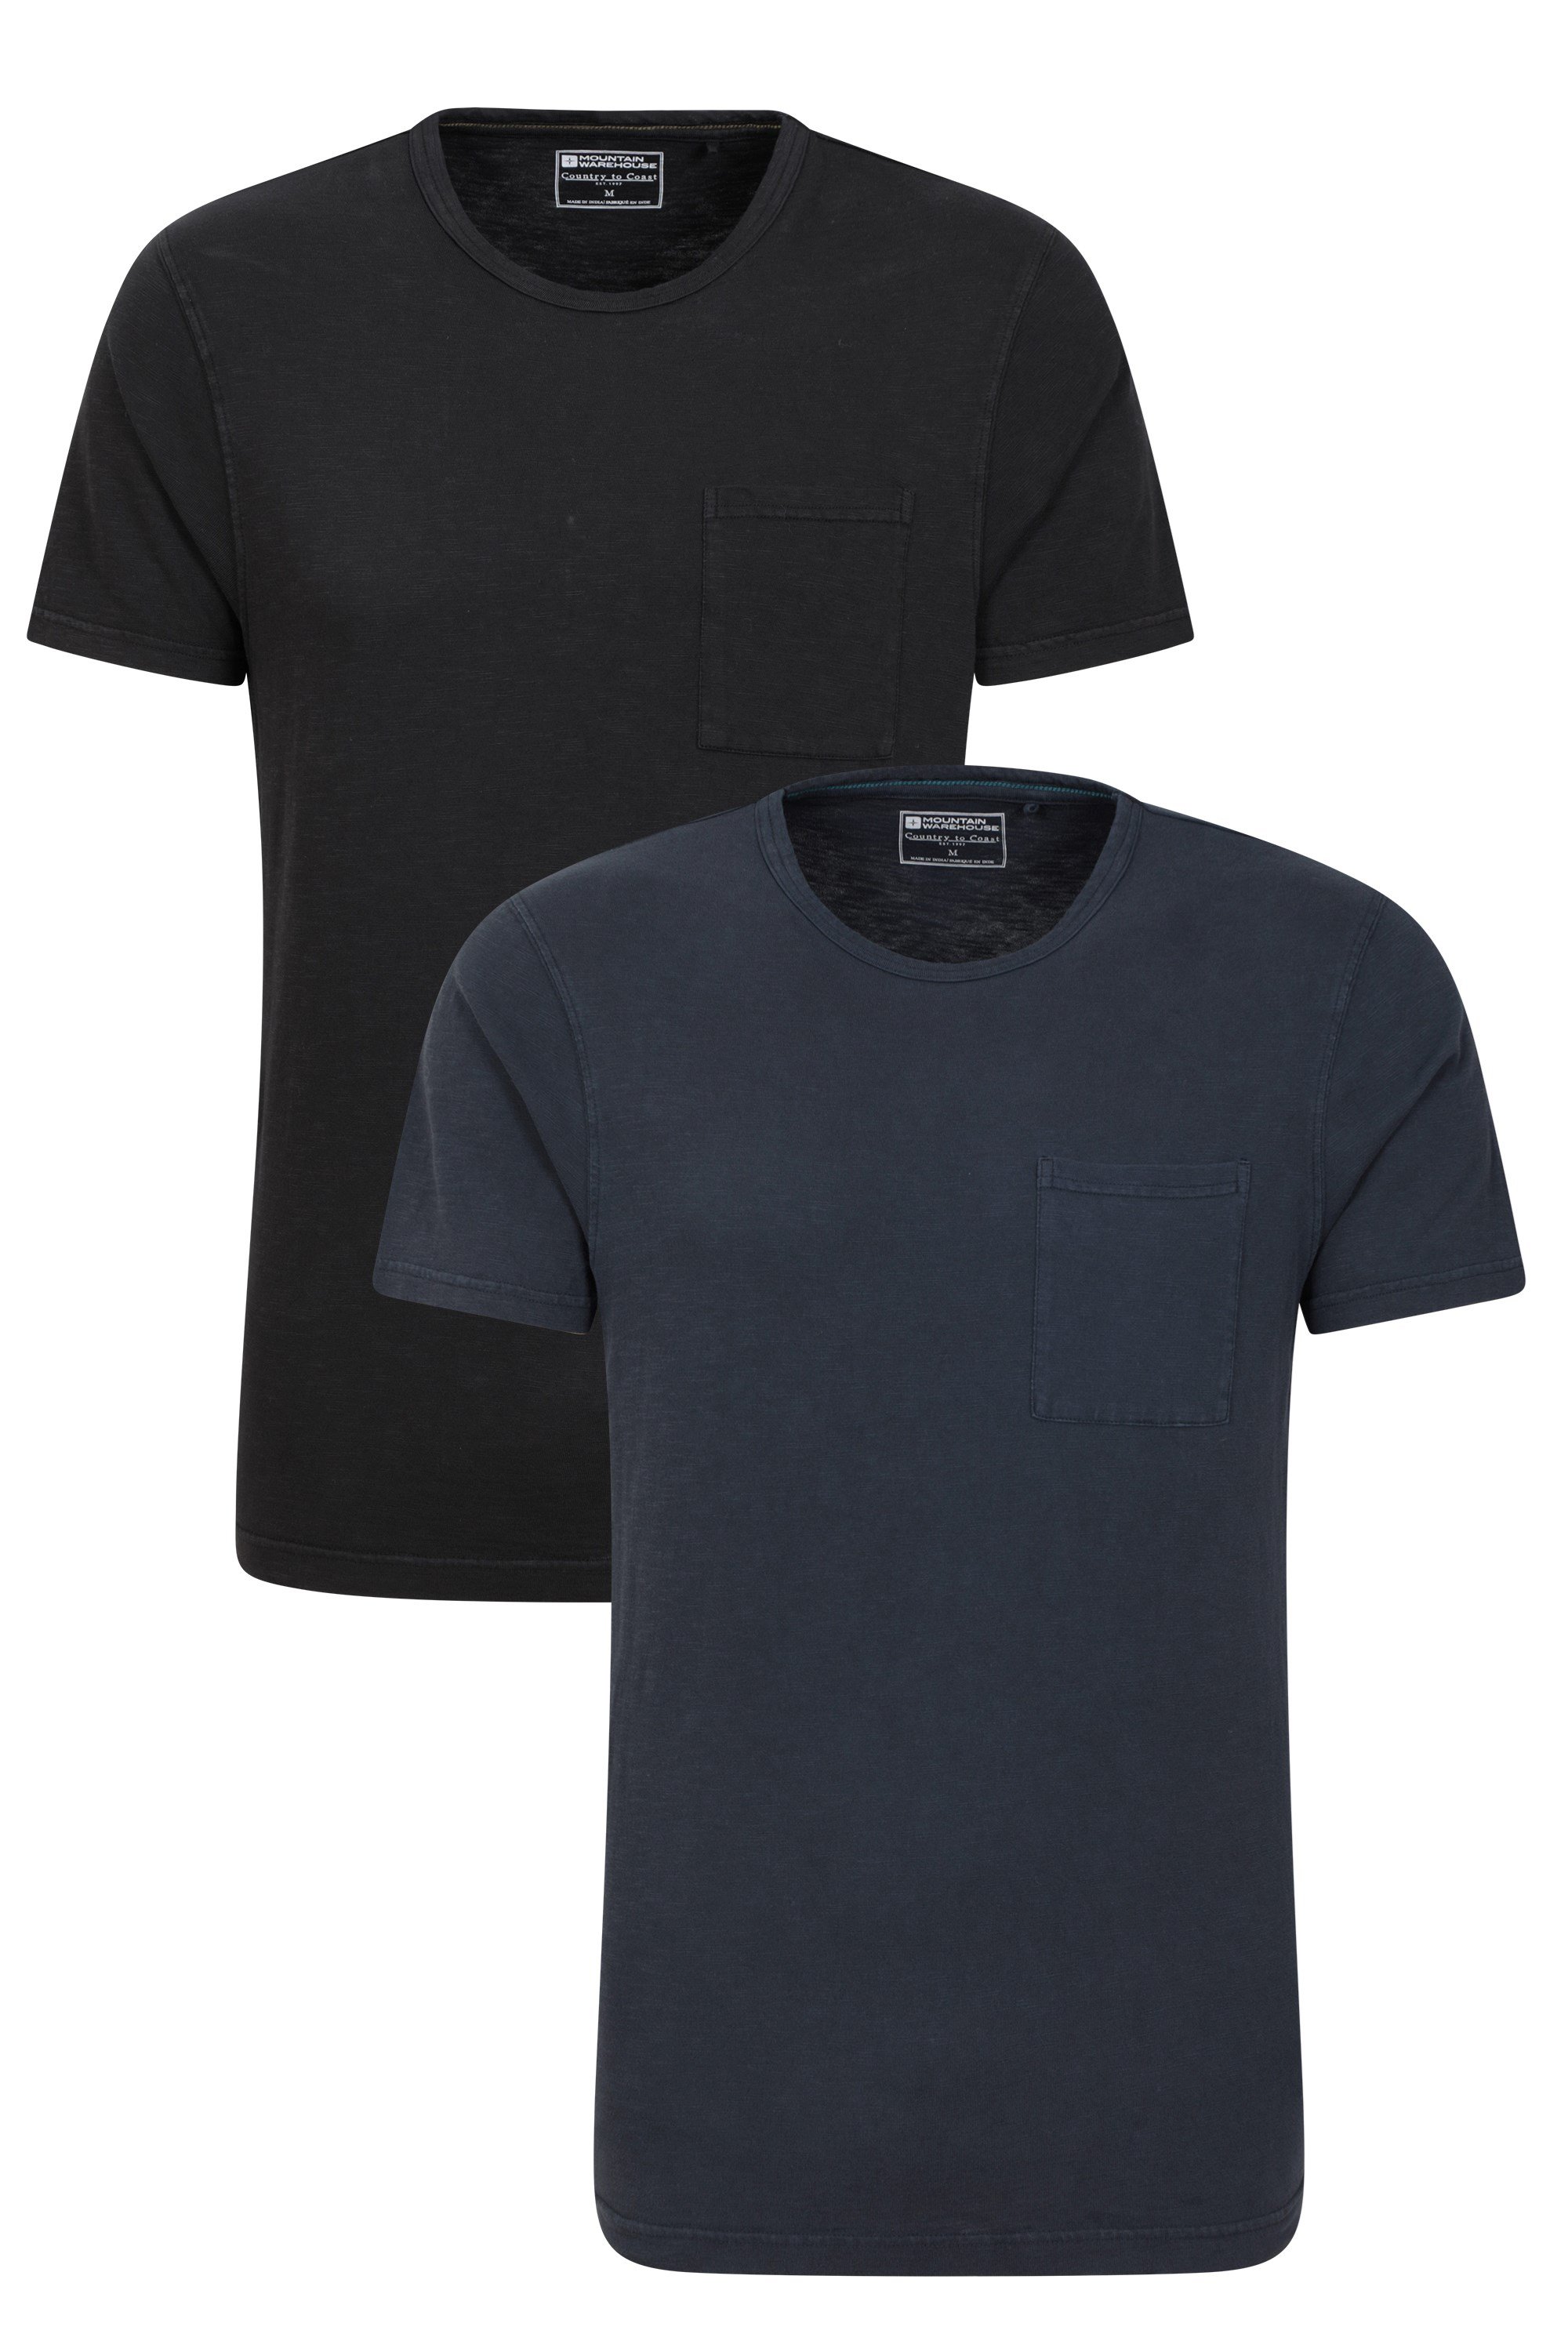 Fescue Mens T-shirt 2-pack - Black